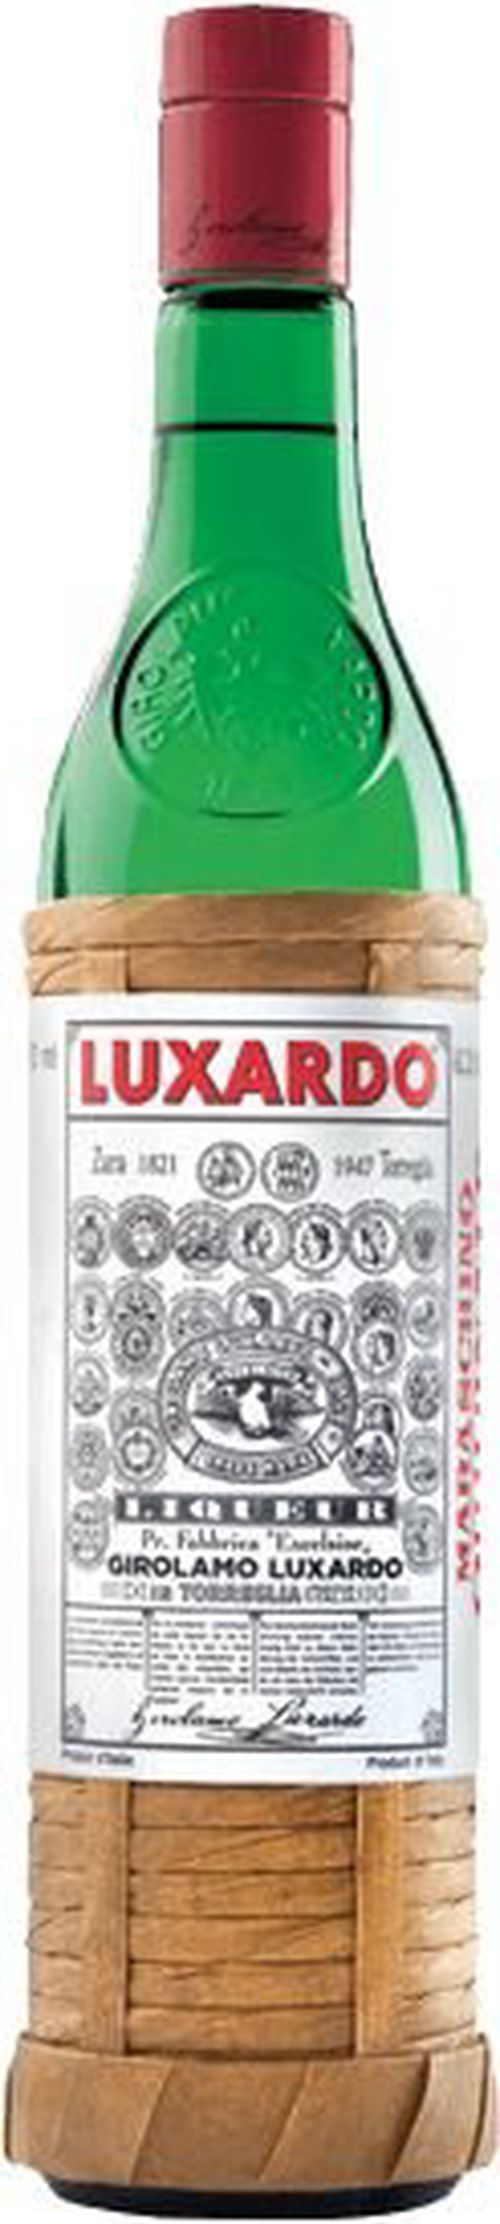 Luxardo Maraschino 1l 32%